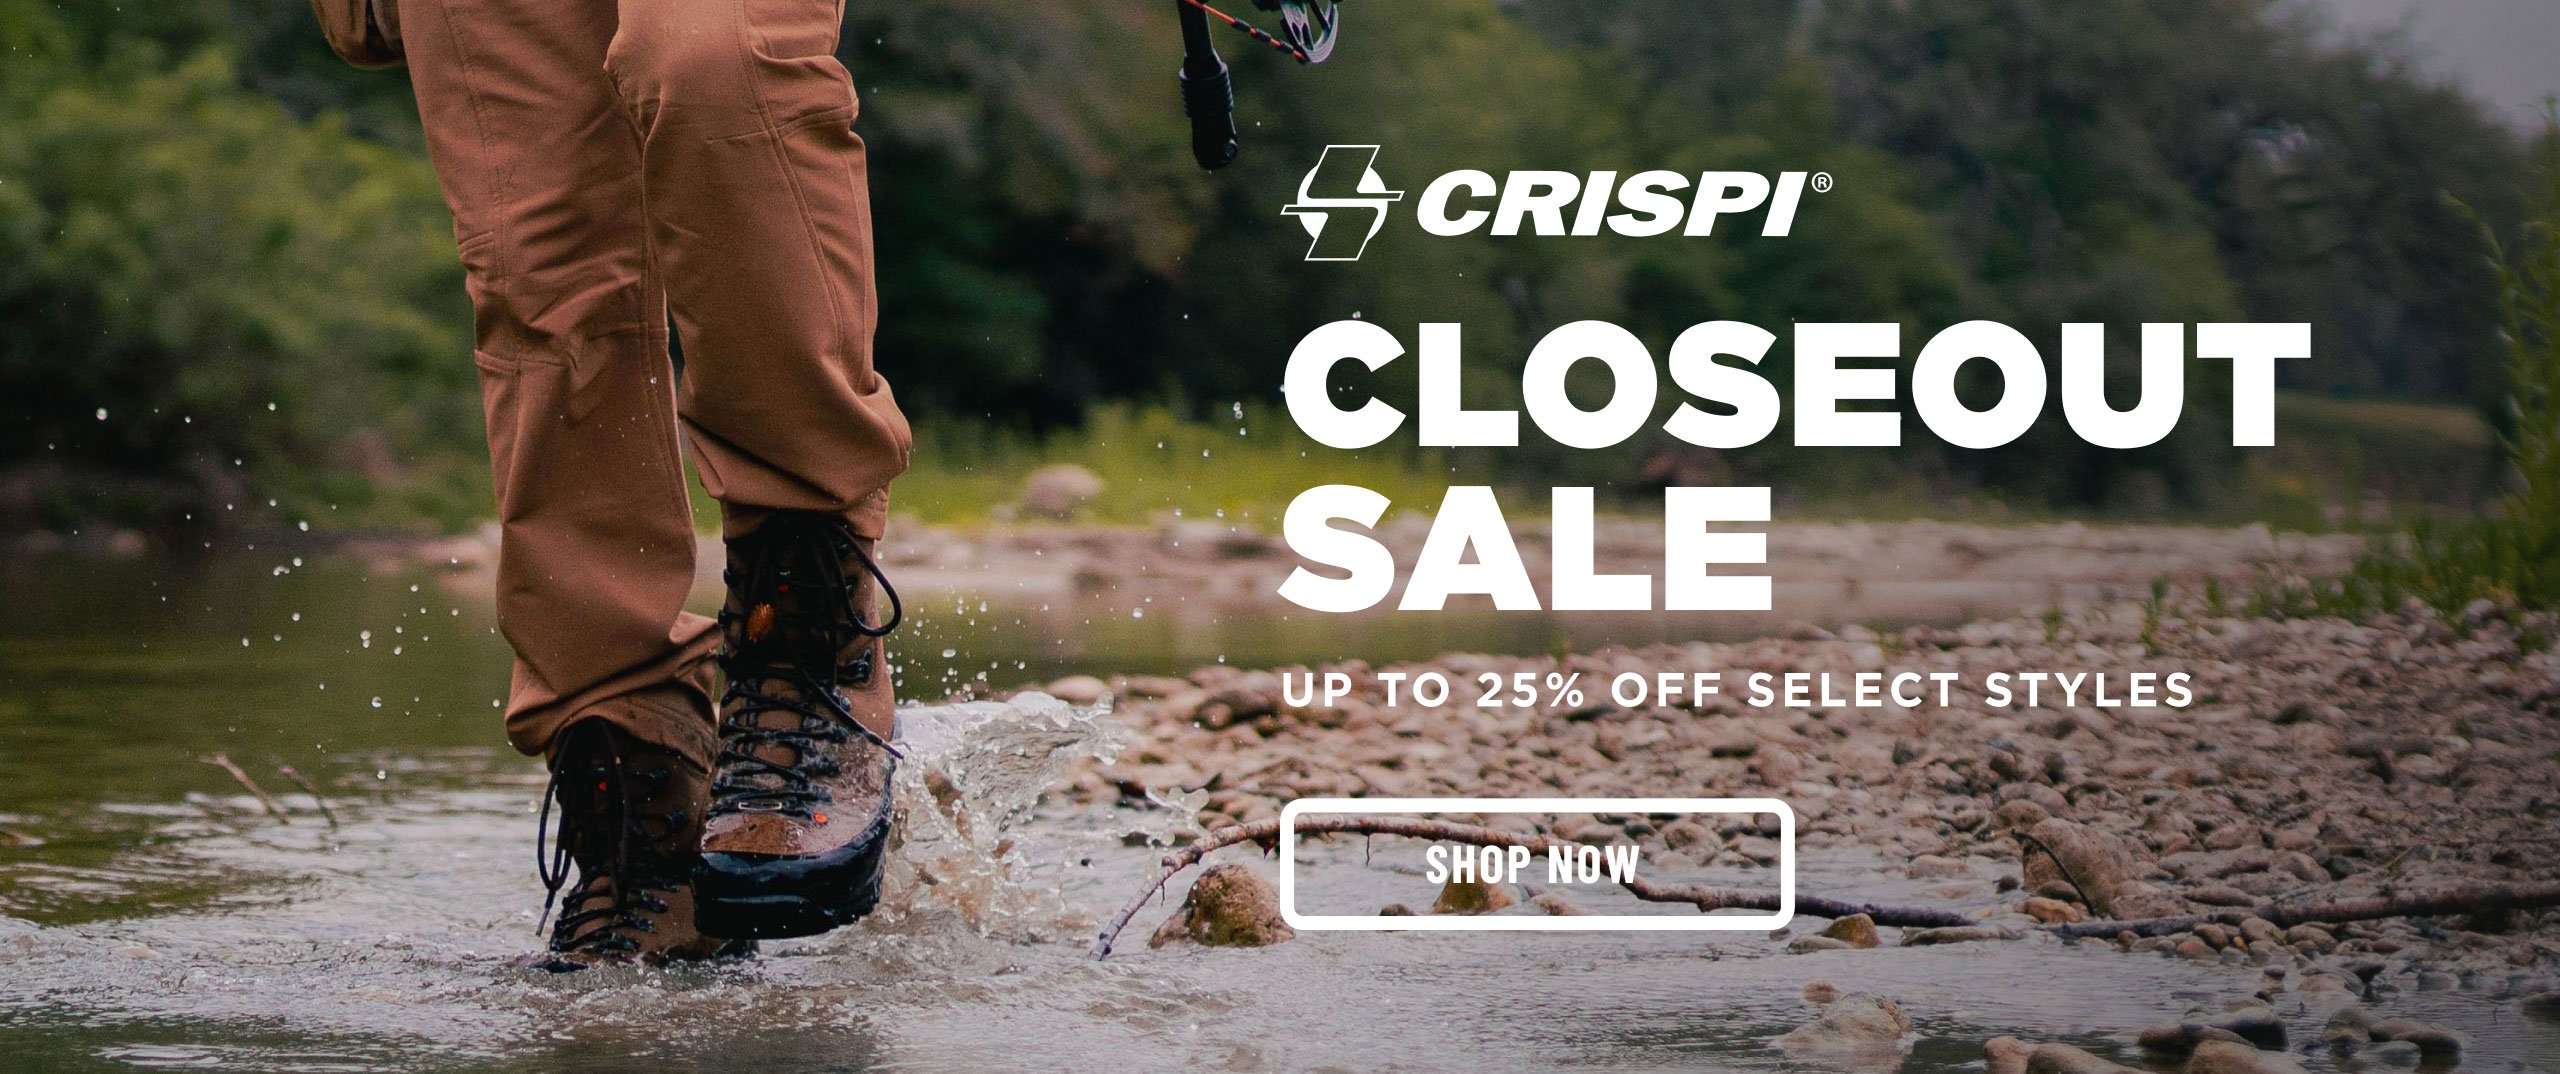 Crispi Closeout Sale